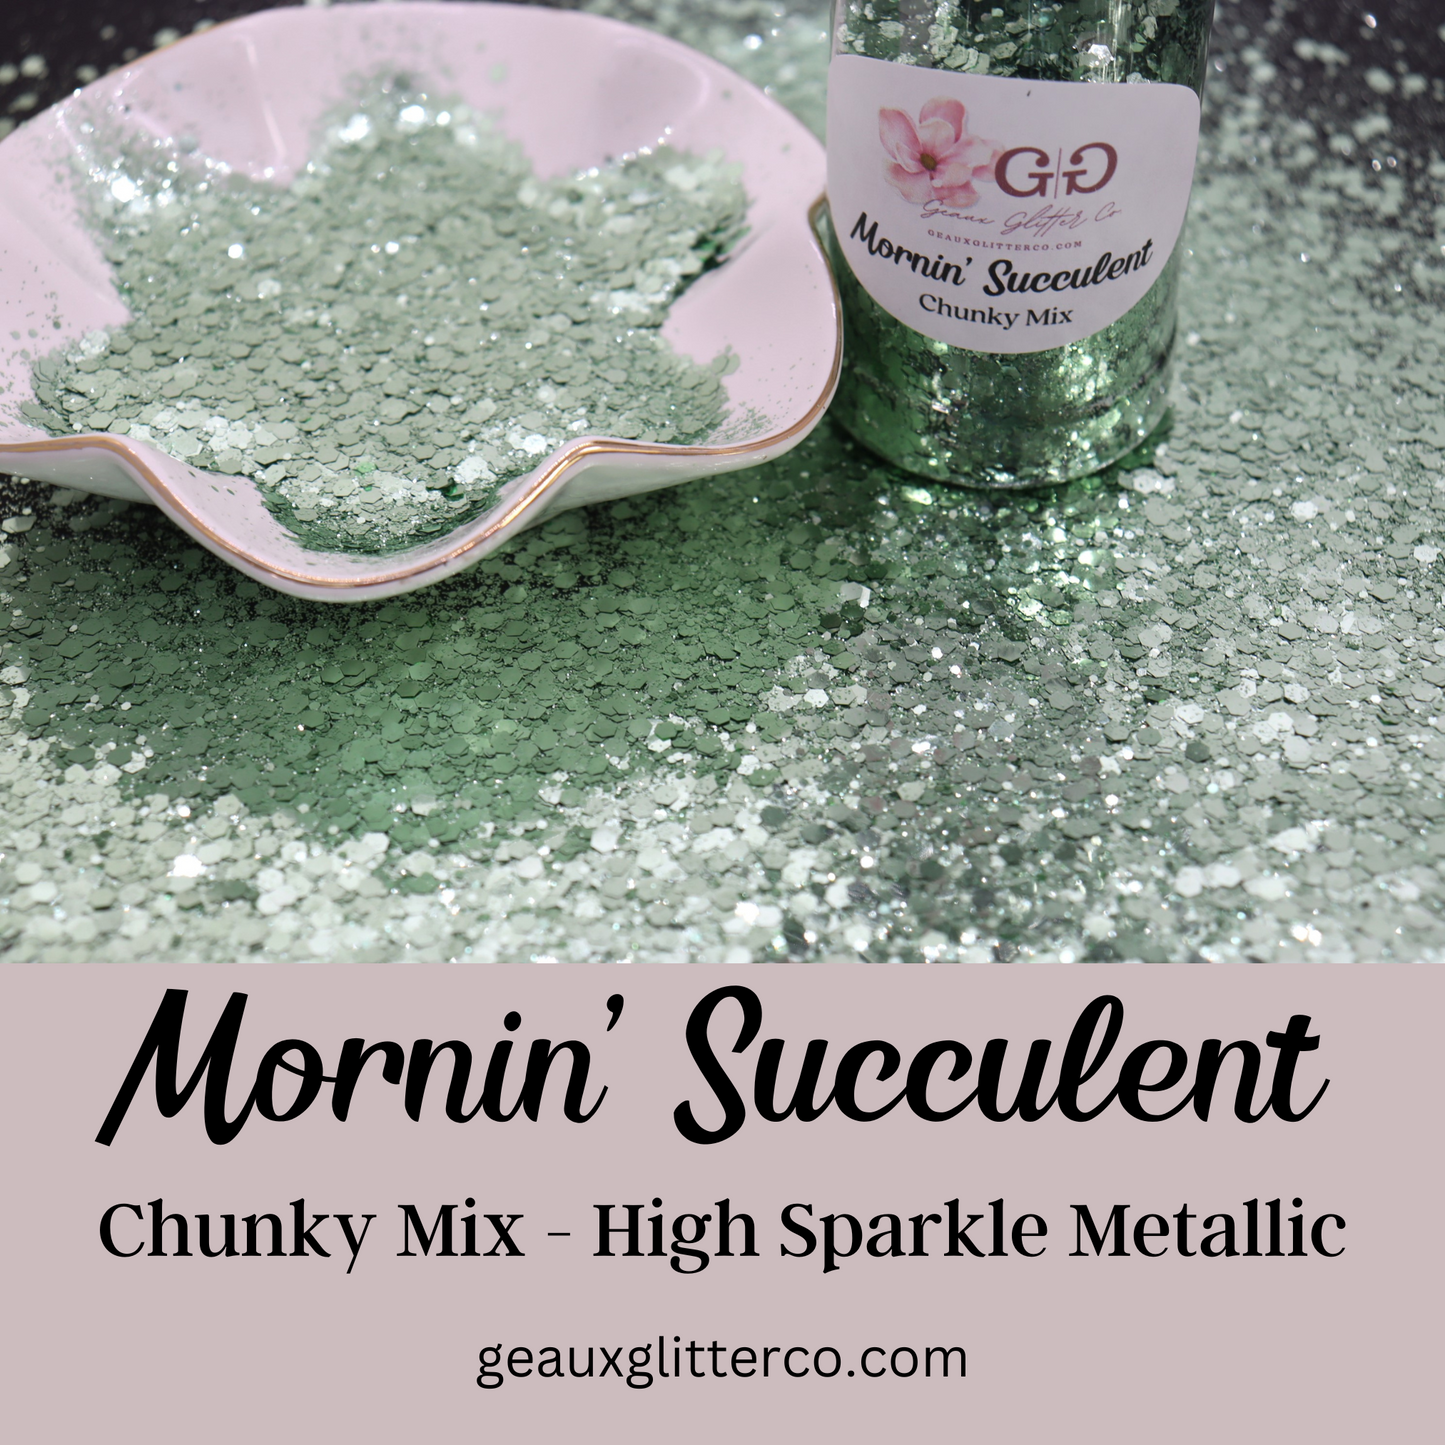 Mornin' Succulent Chunky Mix